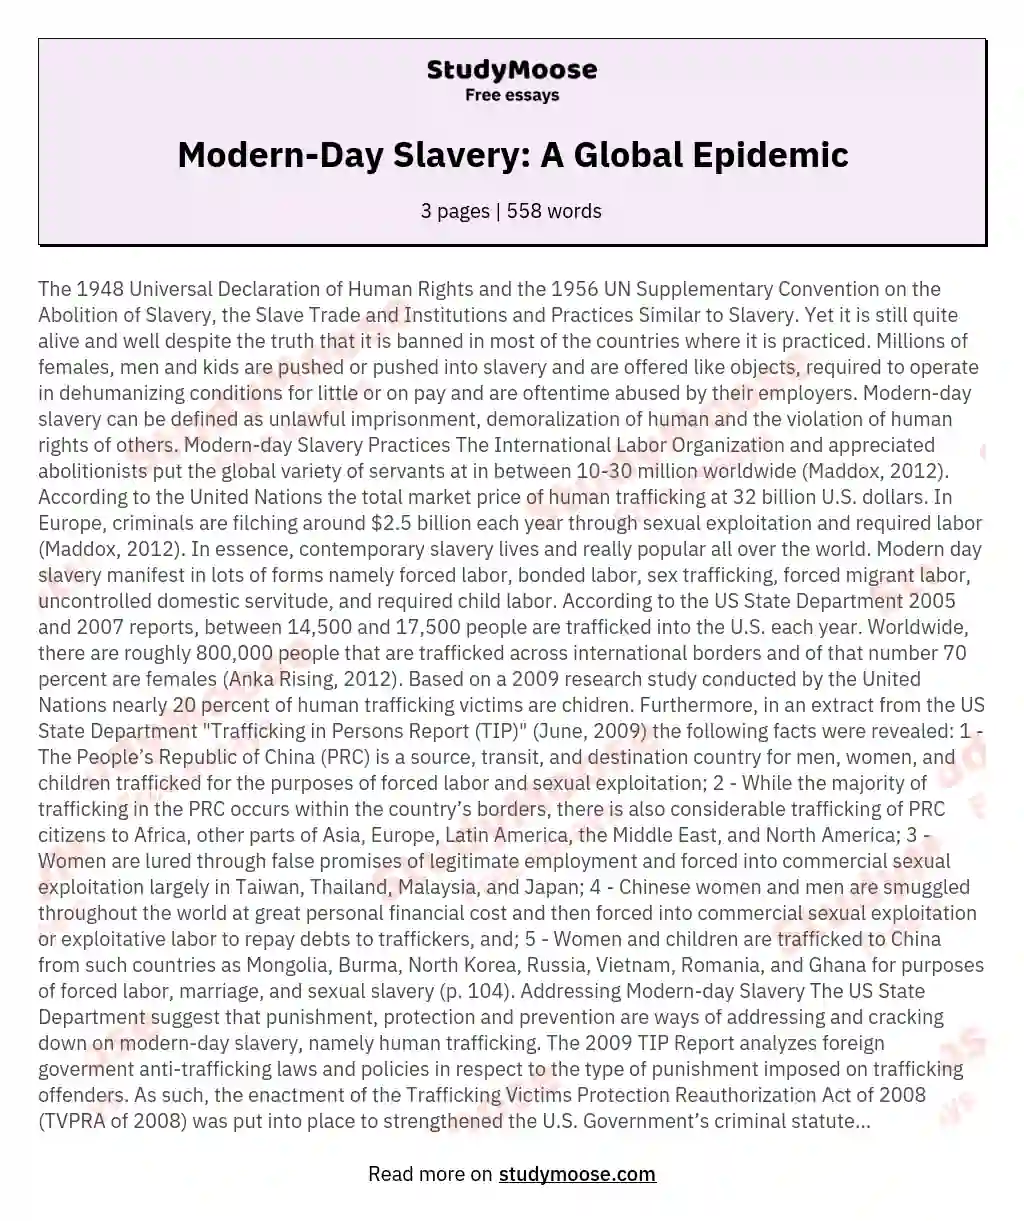 Modern-Day Slavery: A Global Epidemic essay